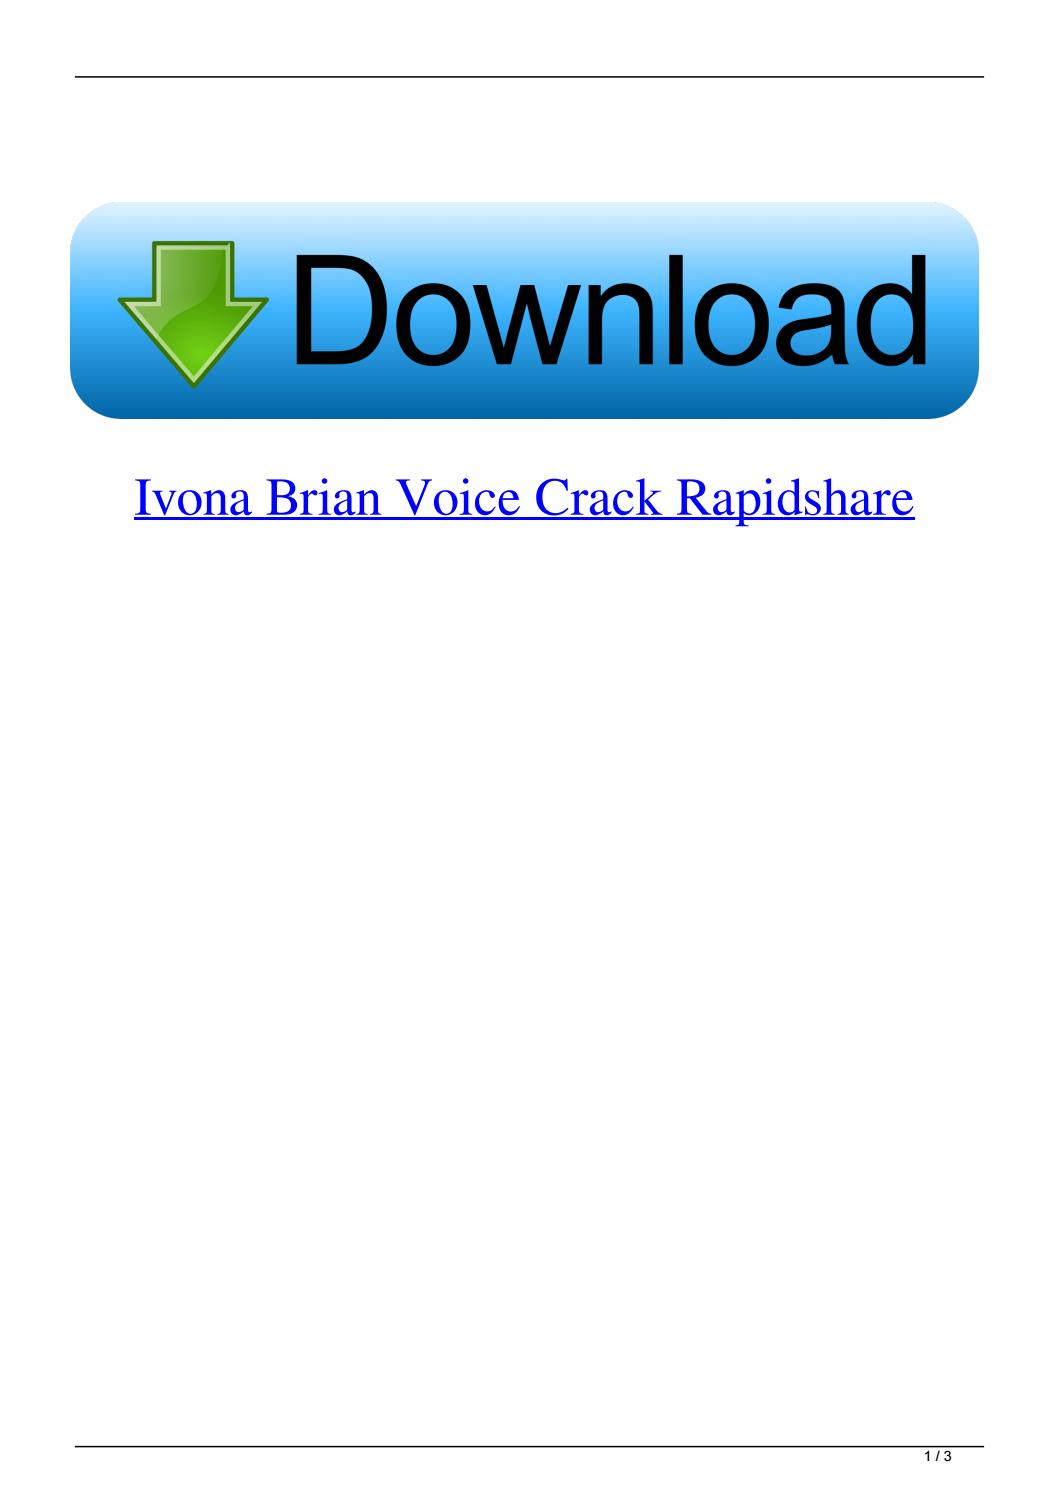 ivona voices 2 crack download